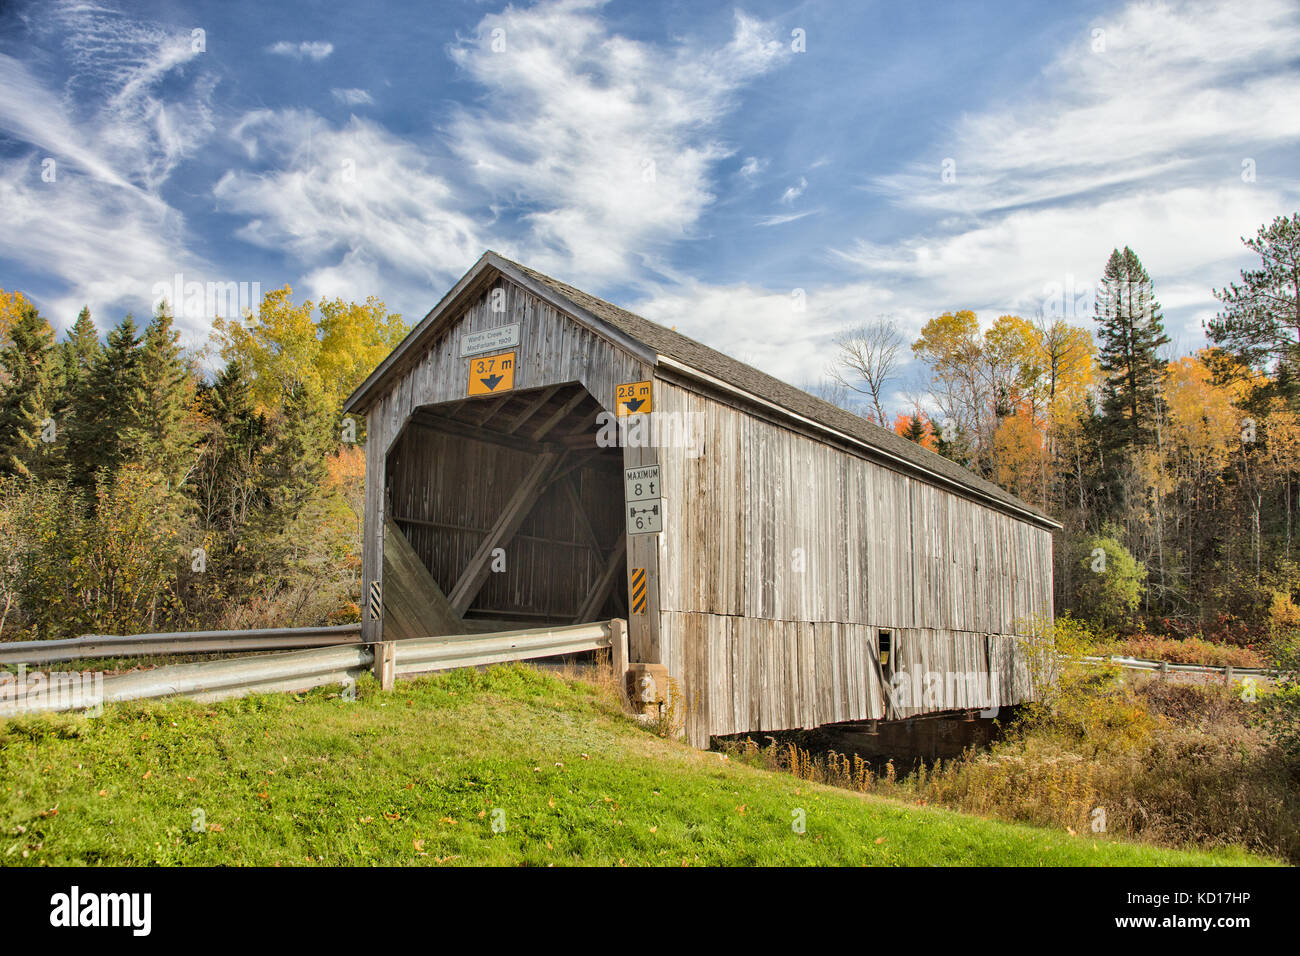 Die Gemeinde Bach #2 Covered Bridge, macfarlane, New Brunswick, Kanada Stockfoto